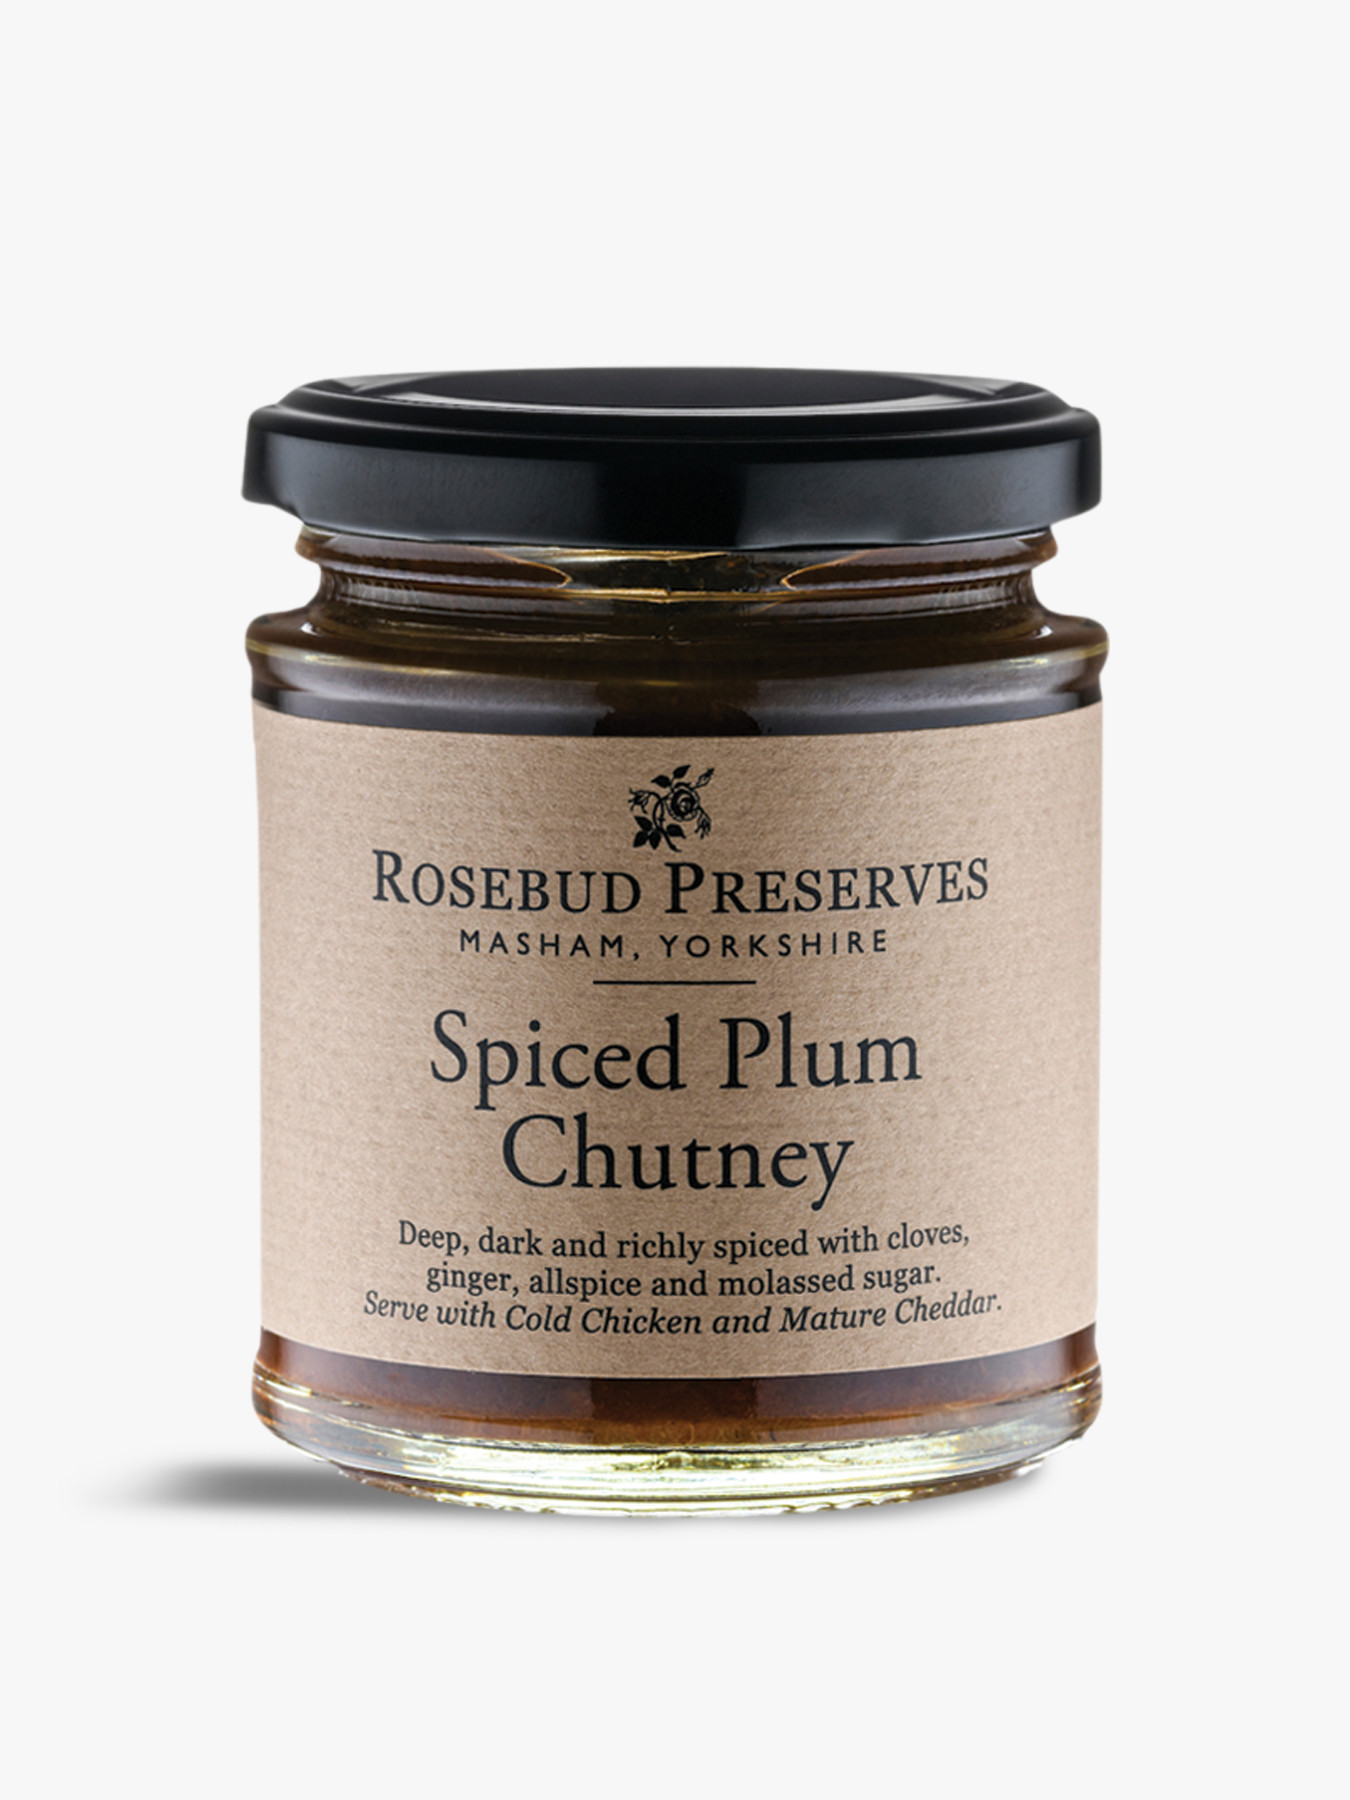 Rosebud Preserves Spiced Plum Chutney 198g | Fenwick